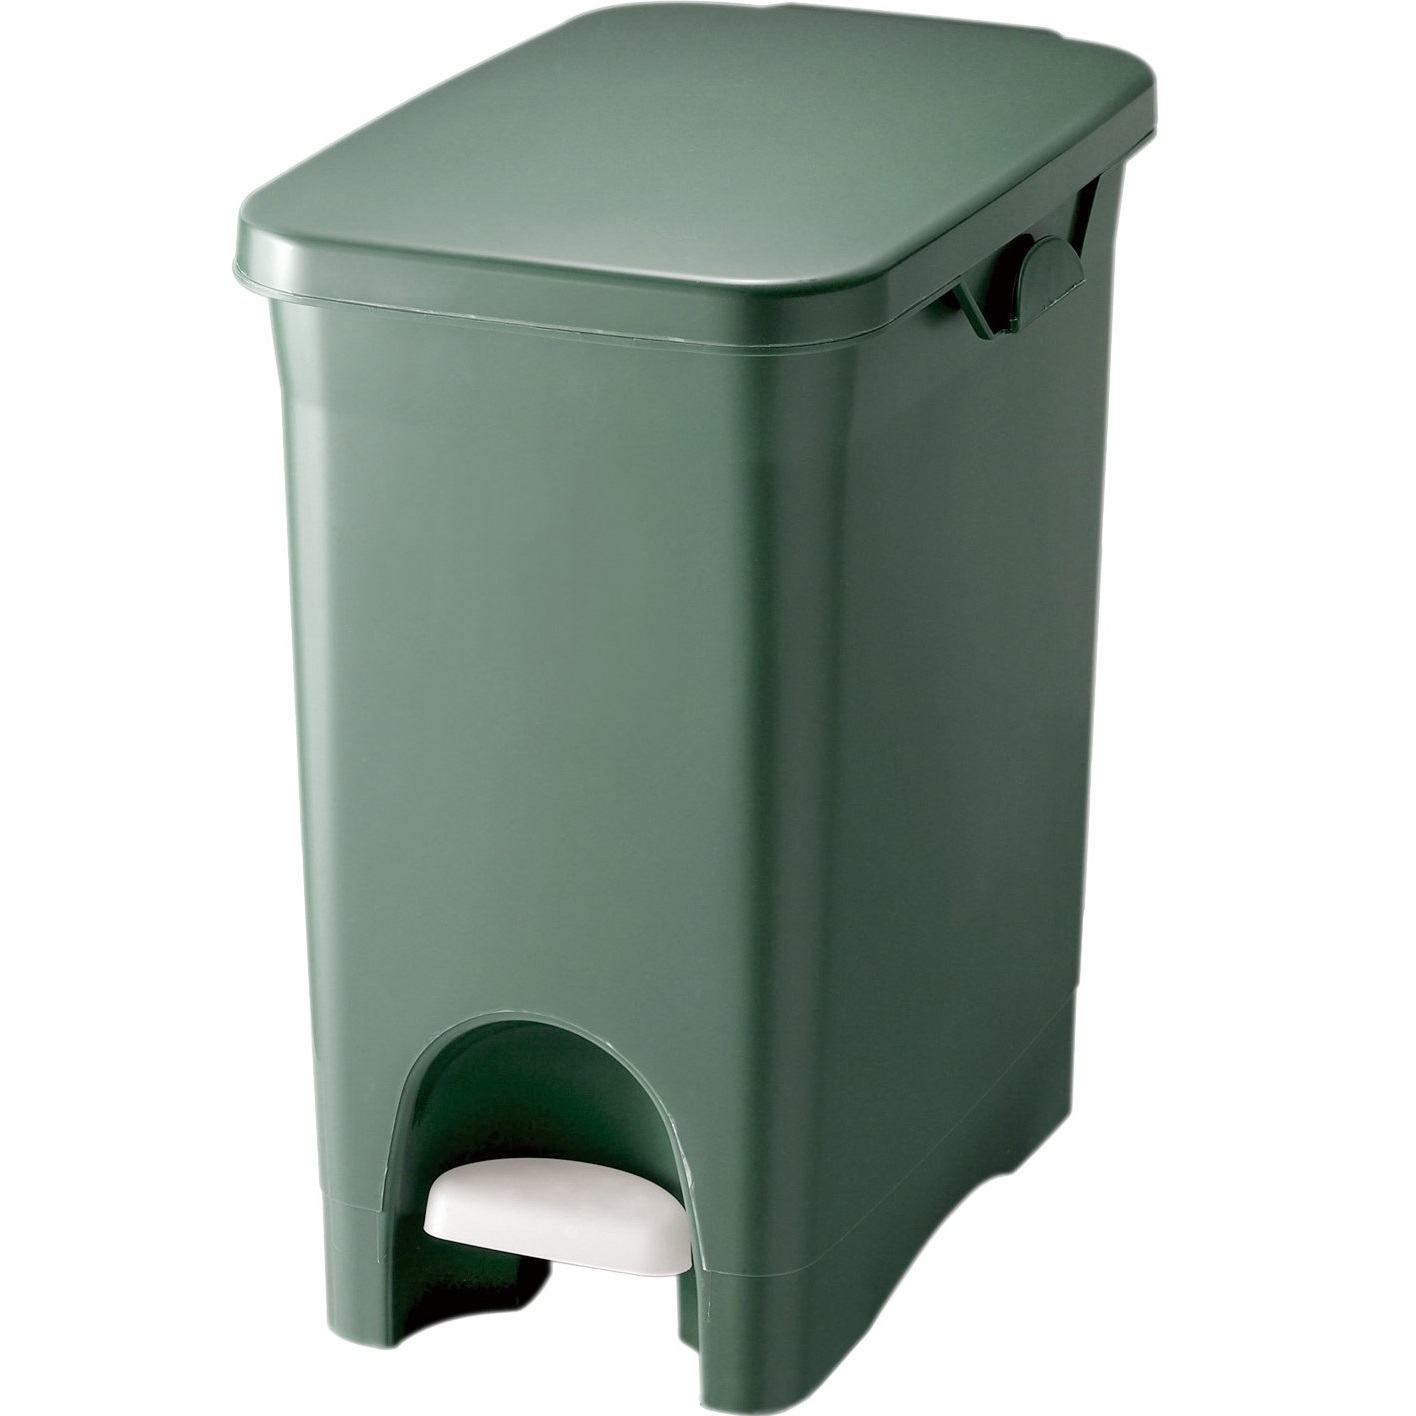 eco container style｜(SABIRO系列)腳踏式垃圾桶 20L-綠色